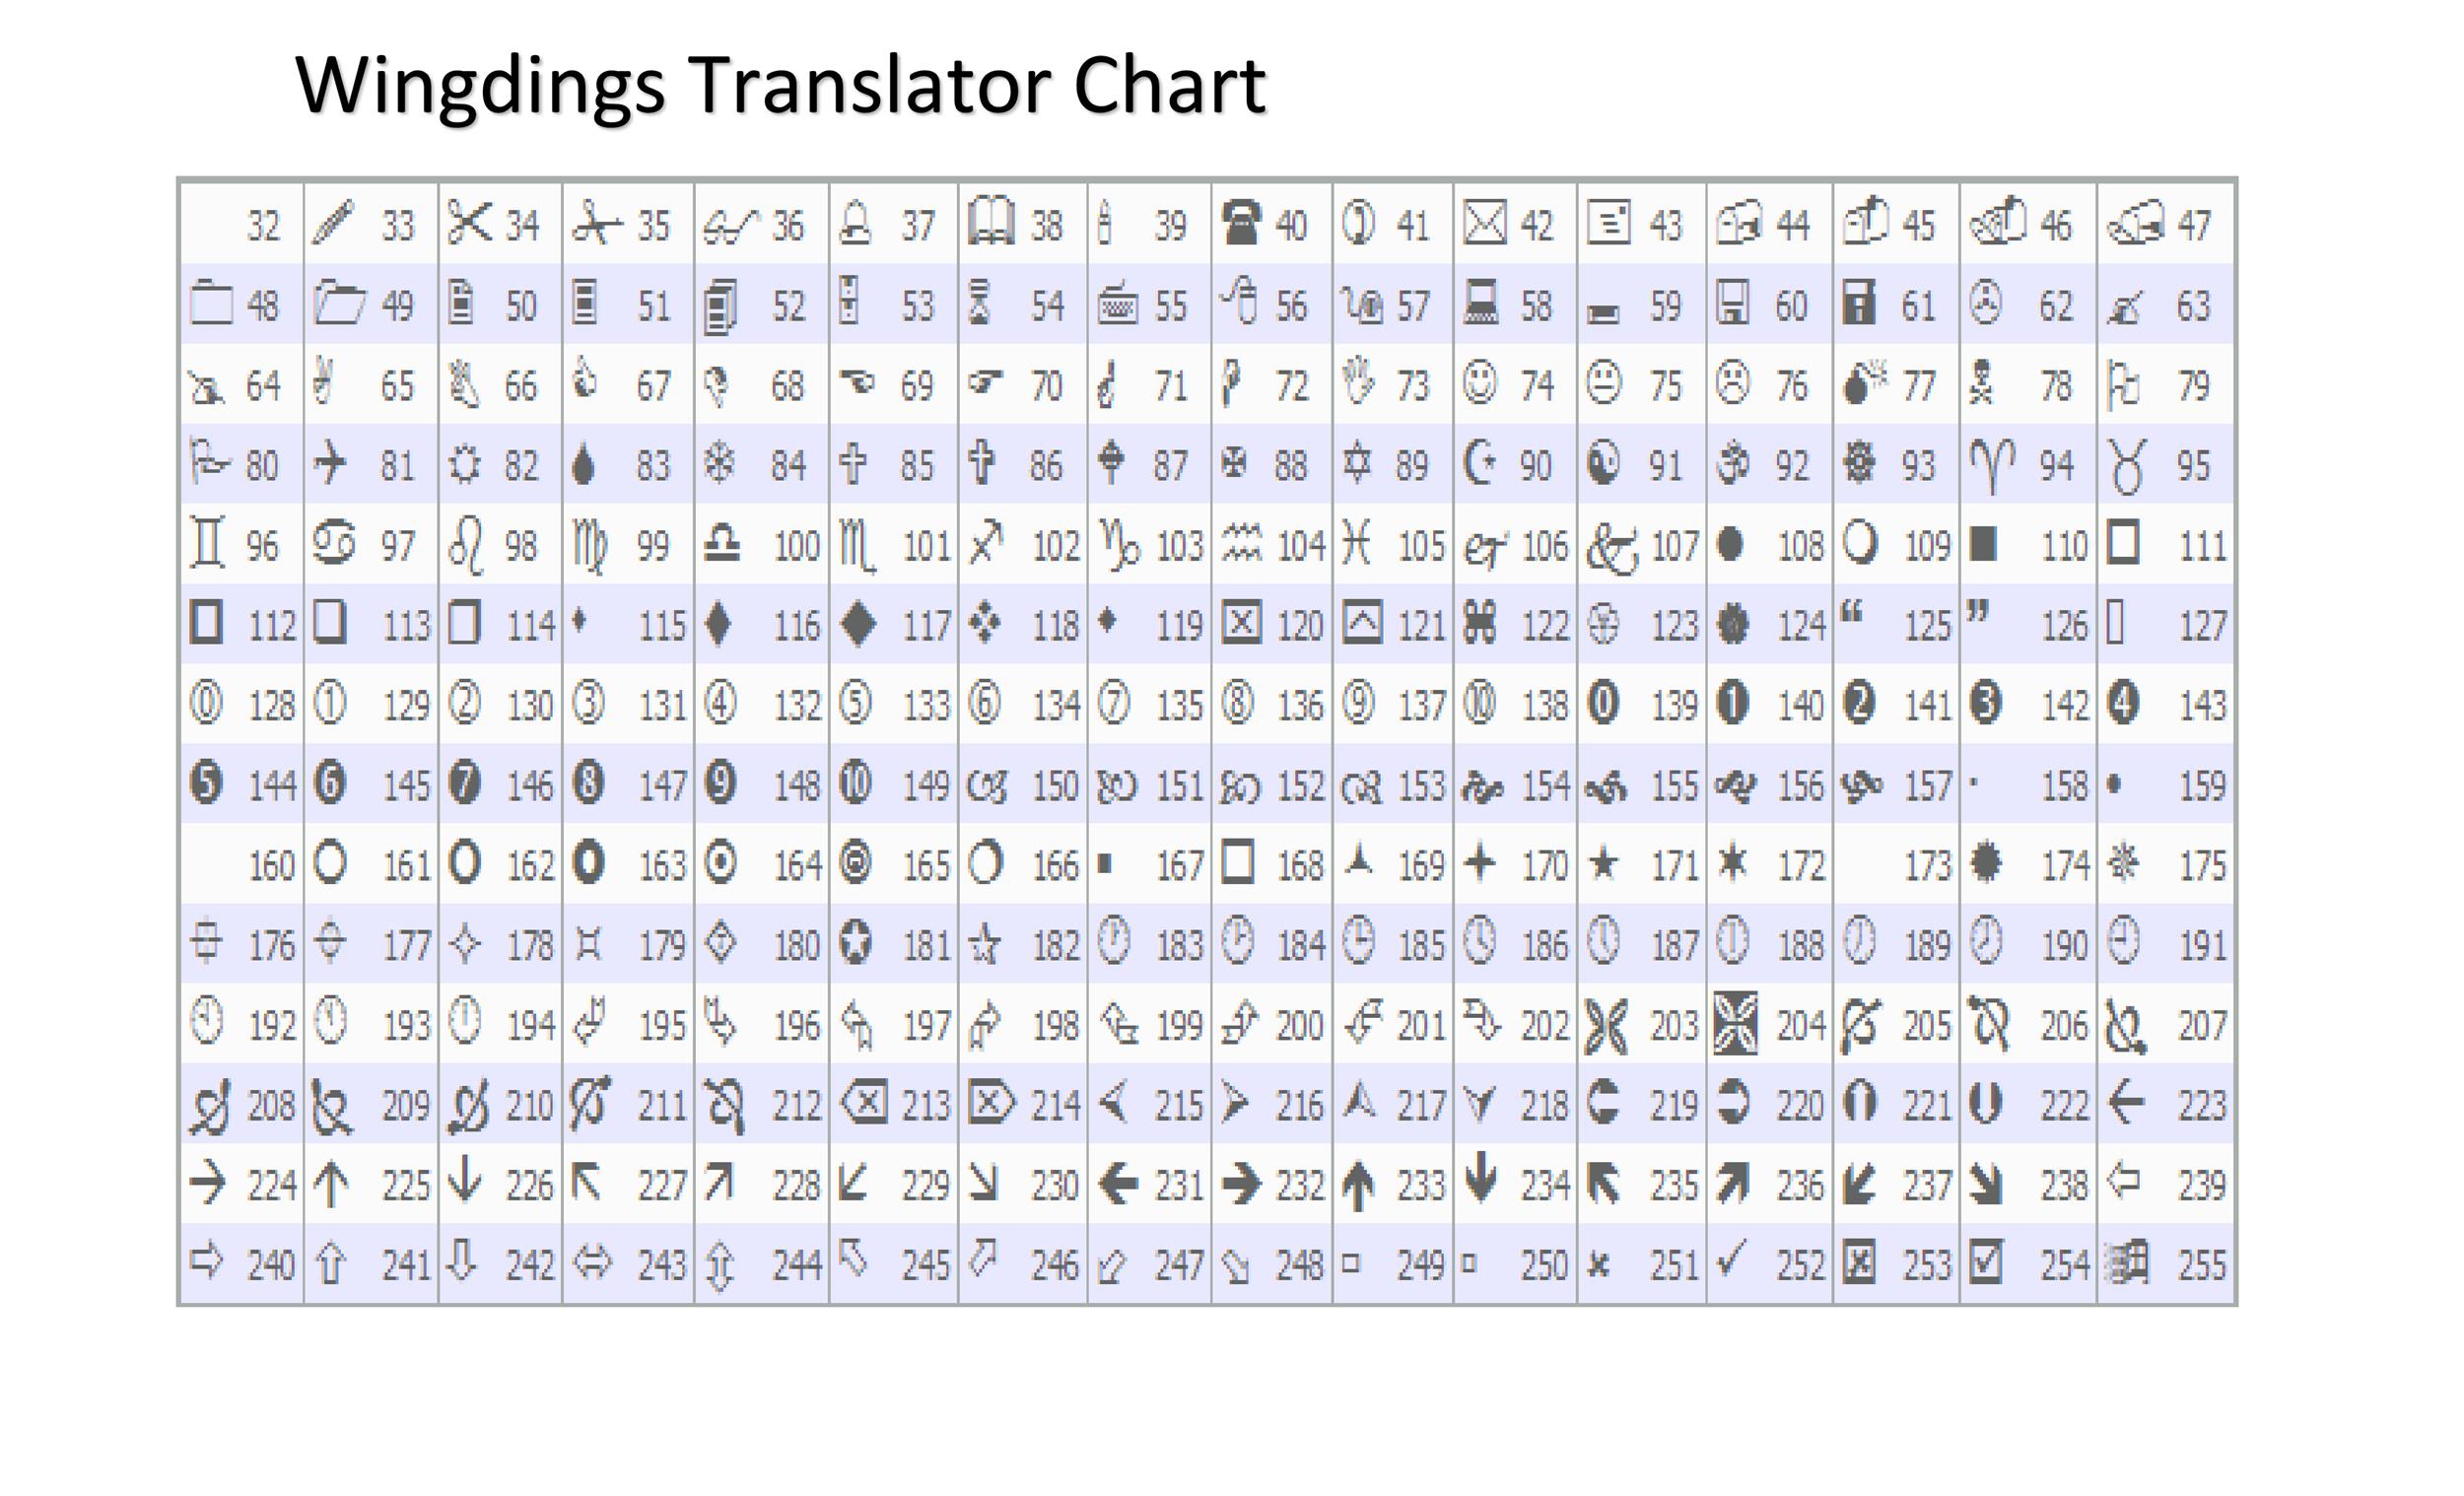 Webdings Chart